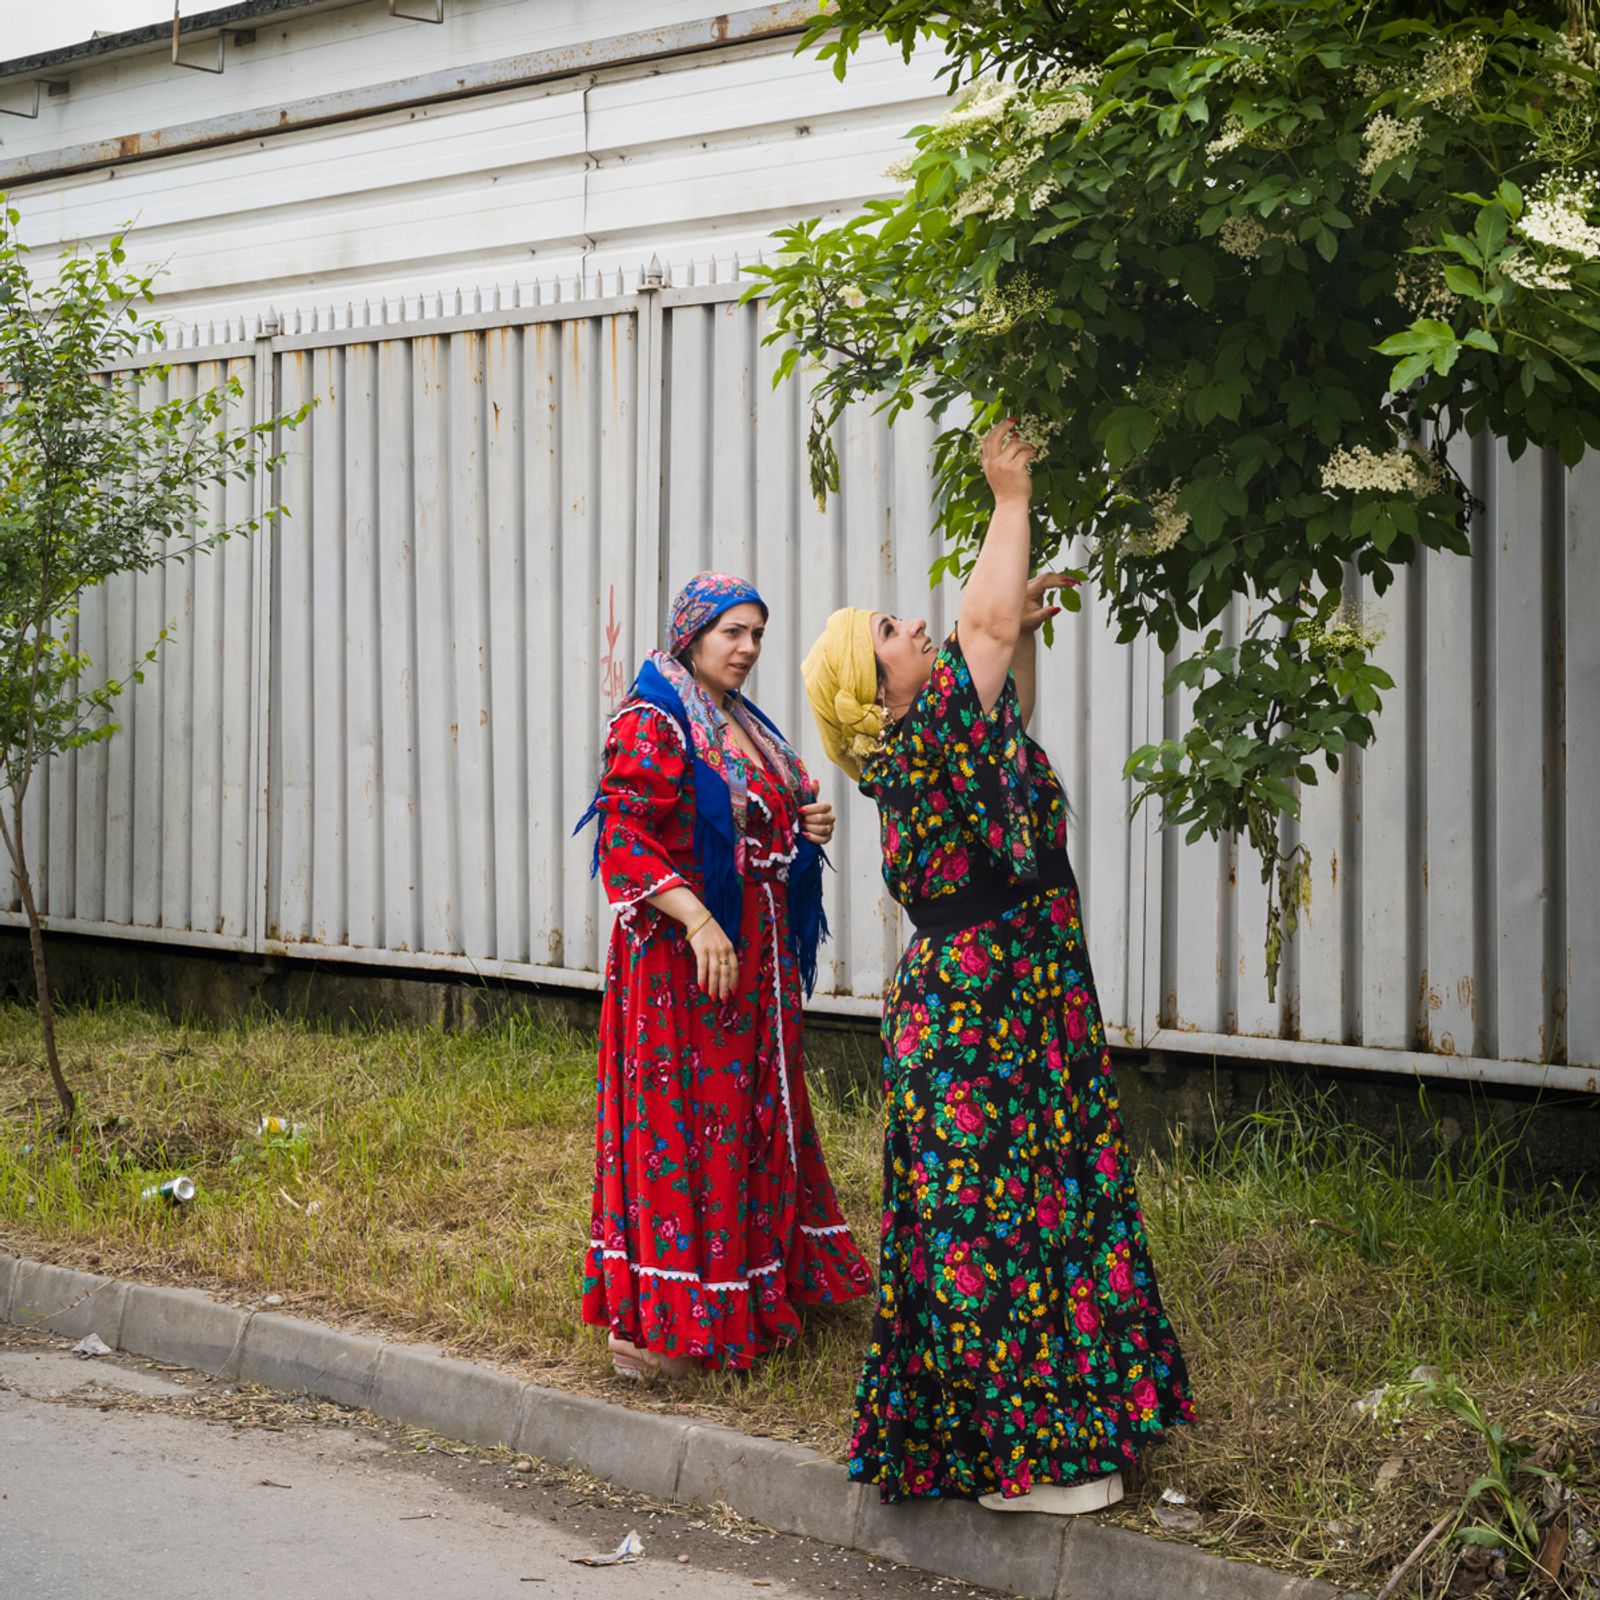 © Johanna Maria Fritz - Ana and Mihaela gather elderflowers for their ritual by the roadside. Mogoșoaia, Romania, 2019.